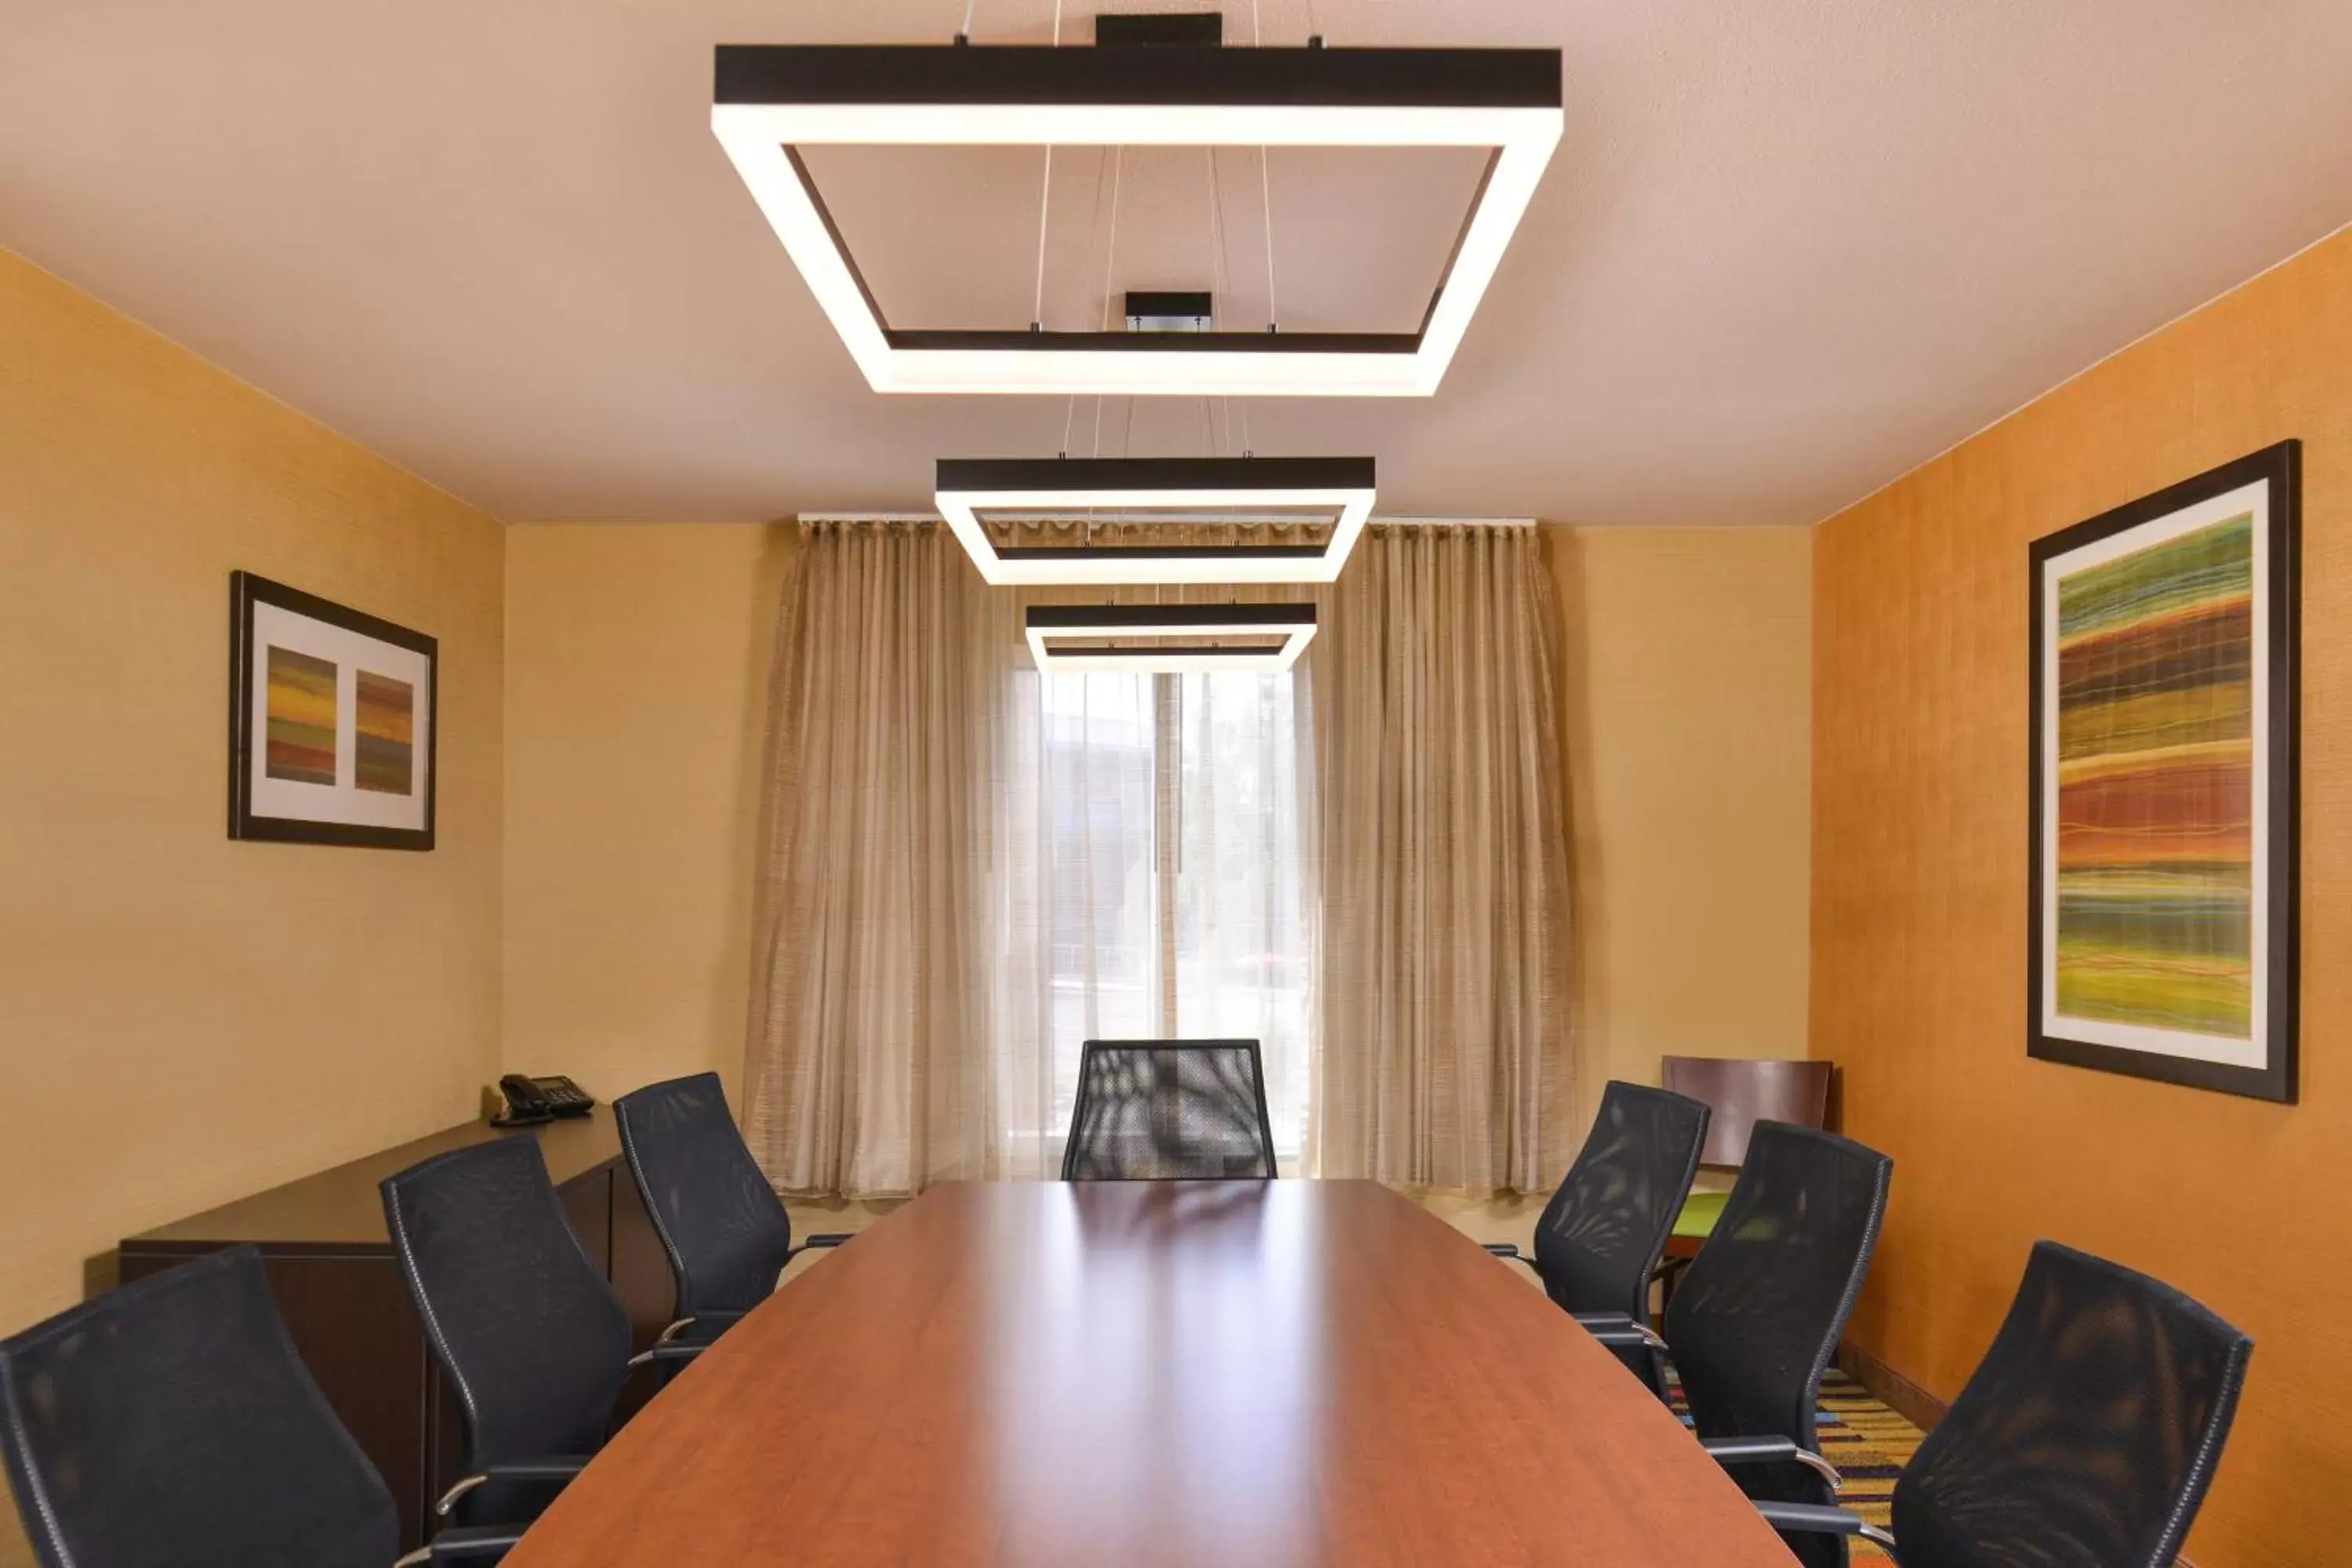 Meeting/conference room in Fairfield Inn & Suites by Marriott Helena